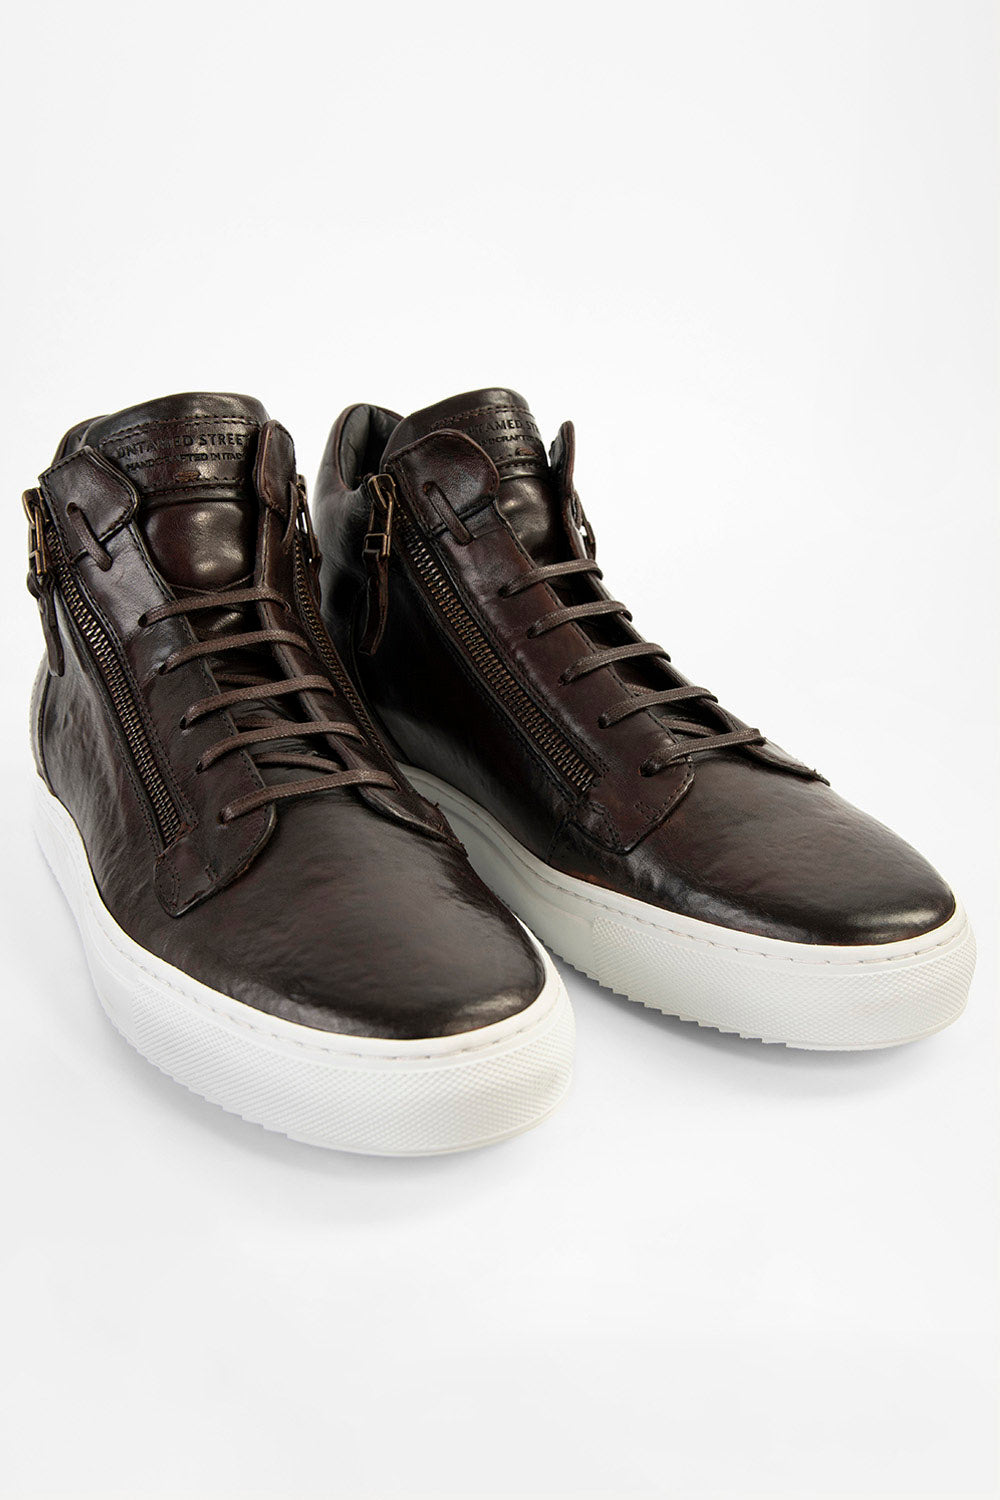 SOHO ROGUE dark-cocoa distressed high sneakers.